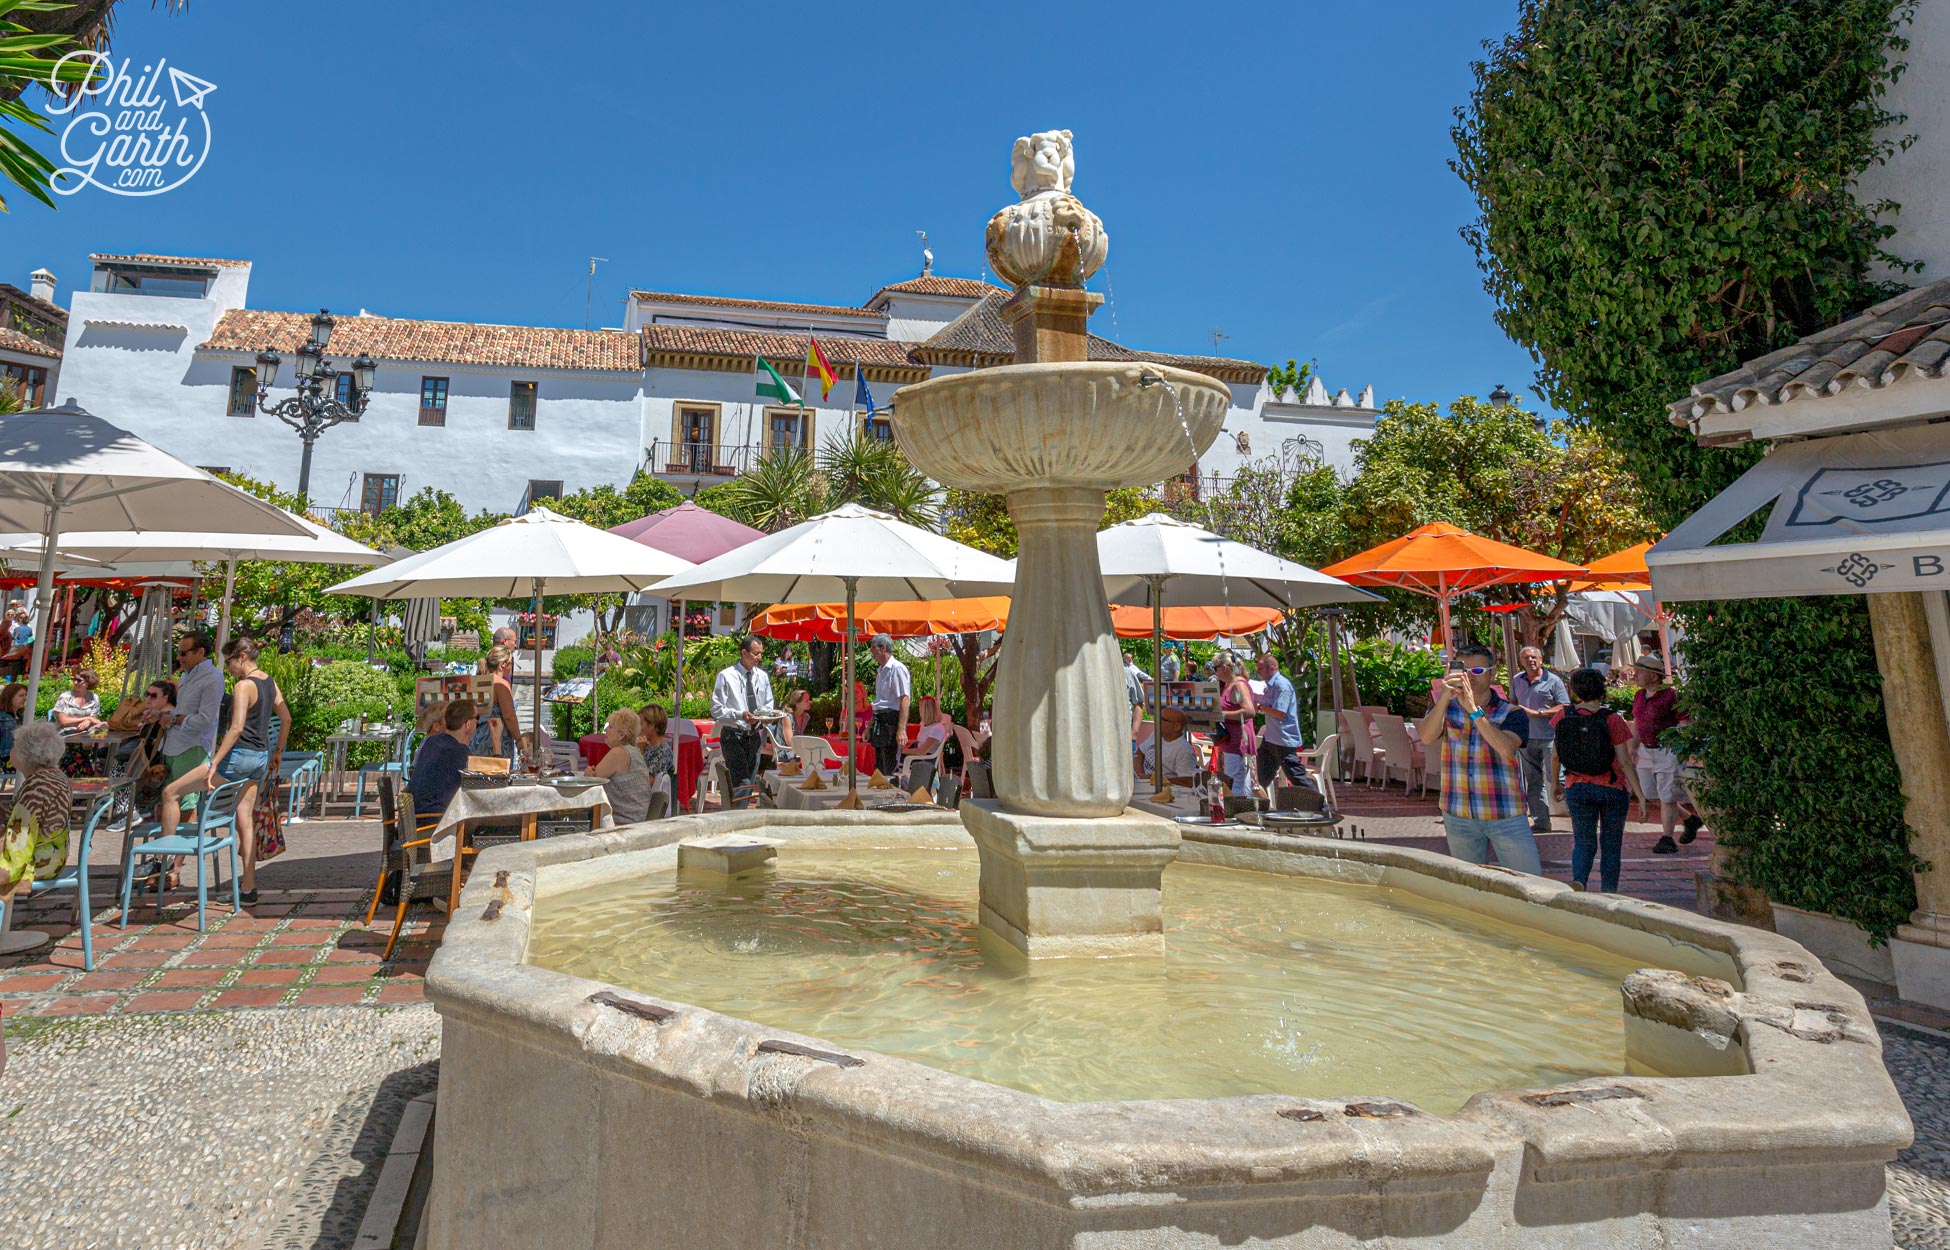 The fountain in Orange Square dates back to 1504